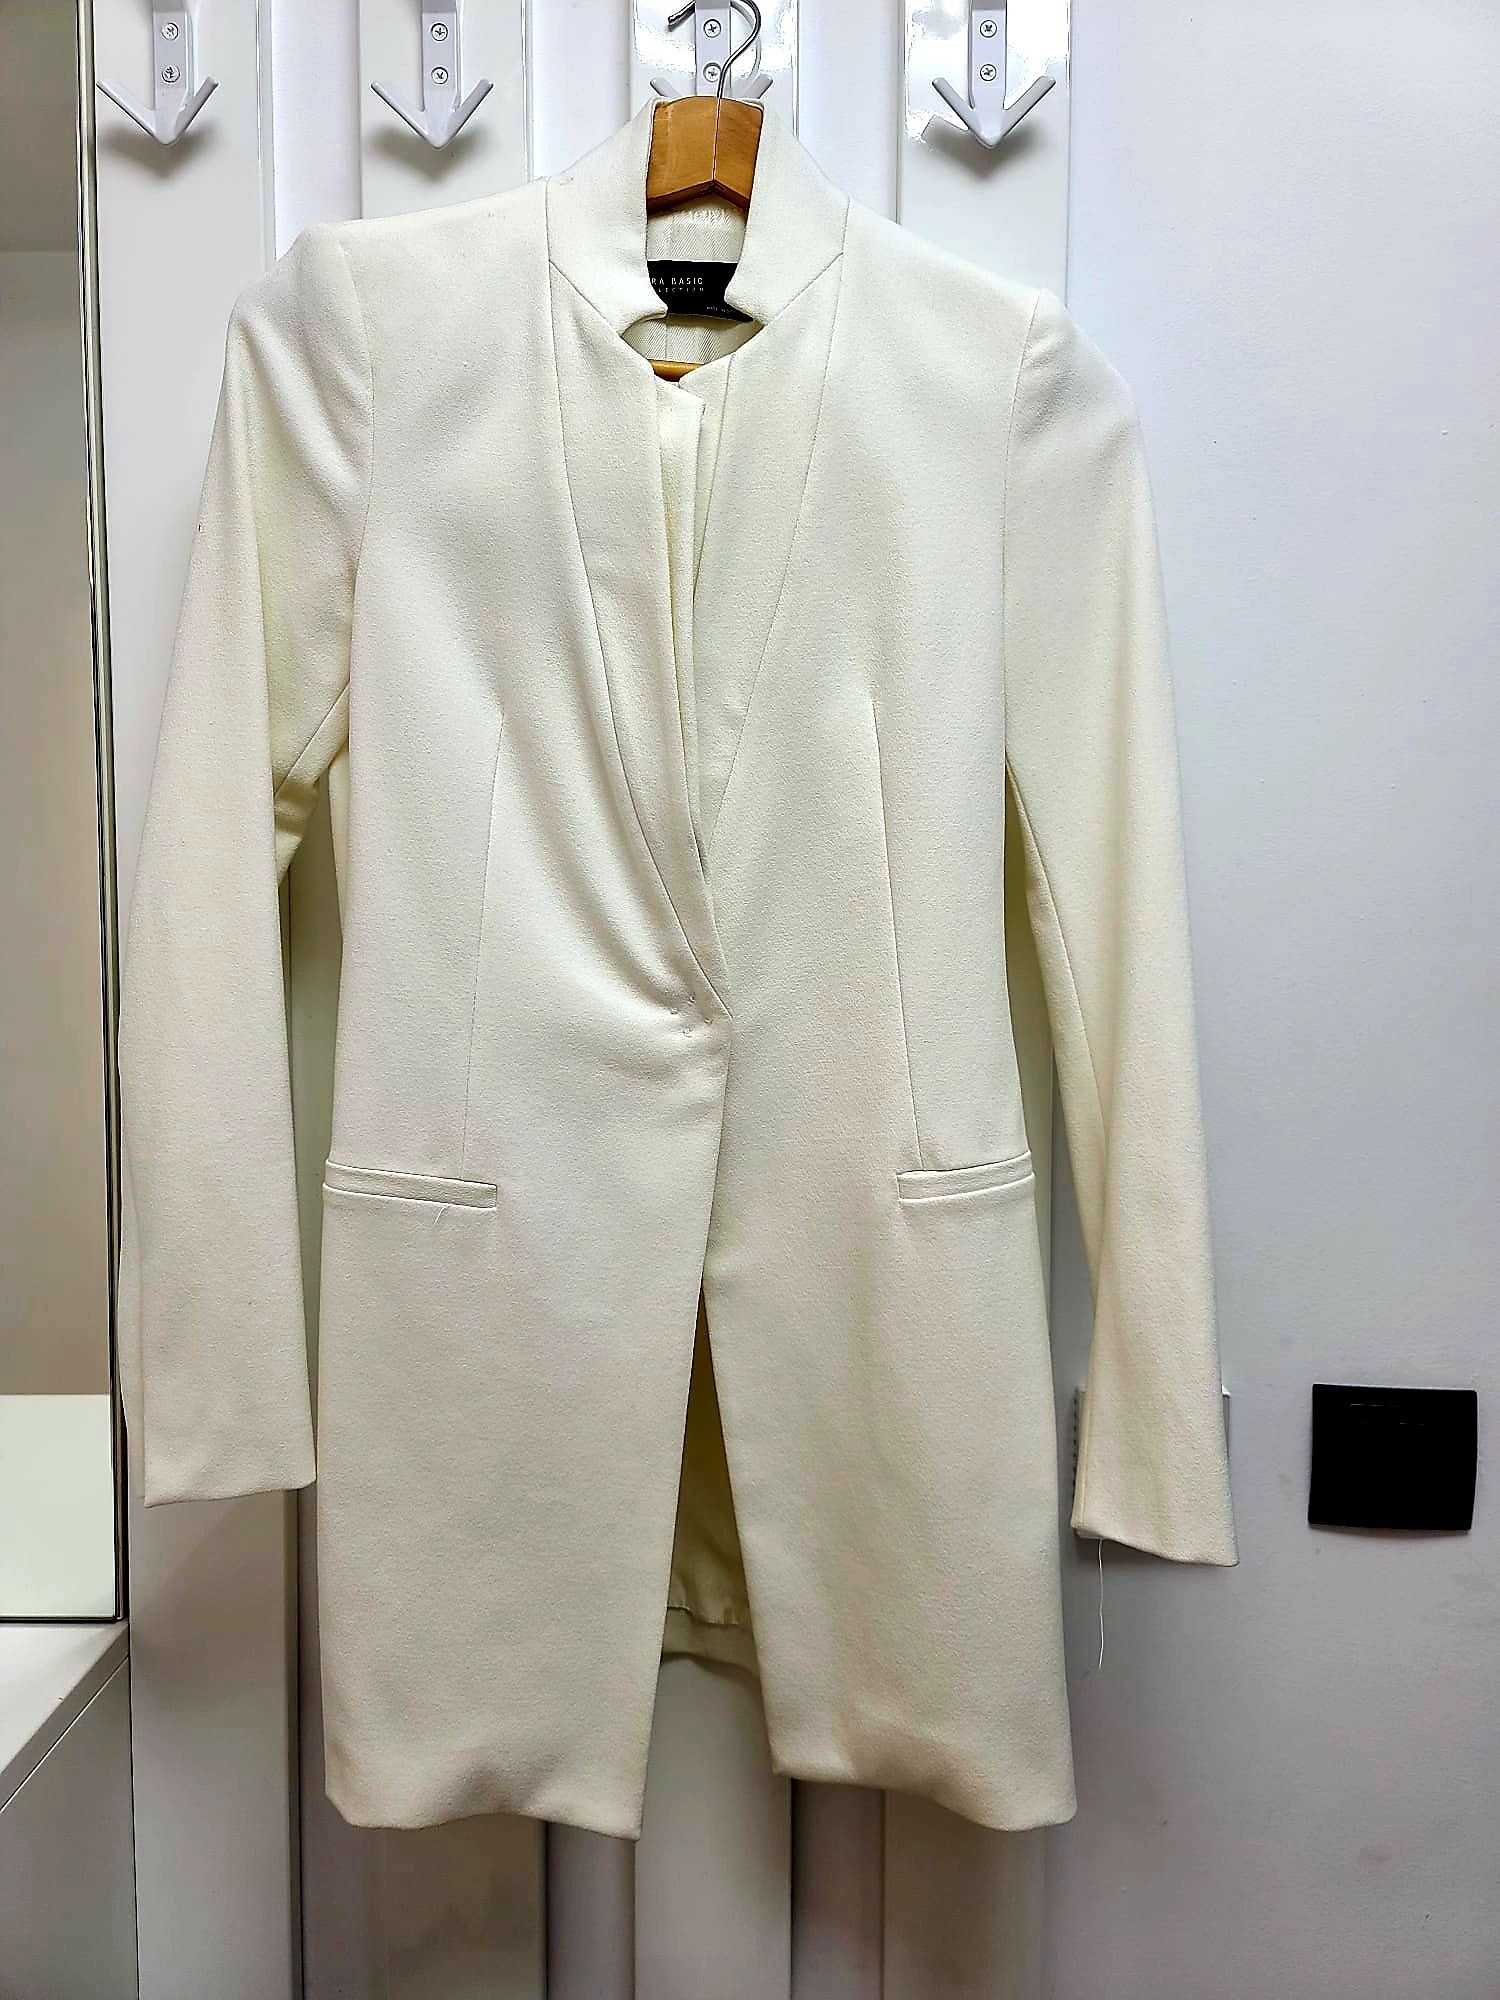 Sacou dama Zara alb / negru tip palton - Transport GRATUIT